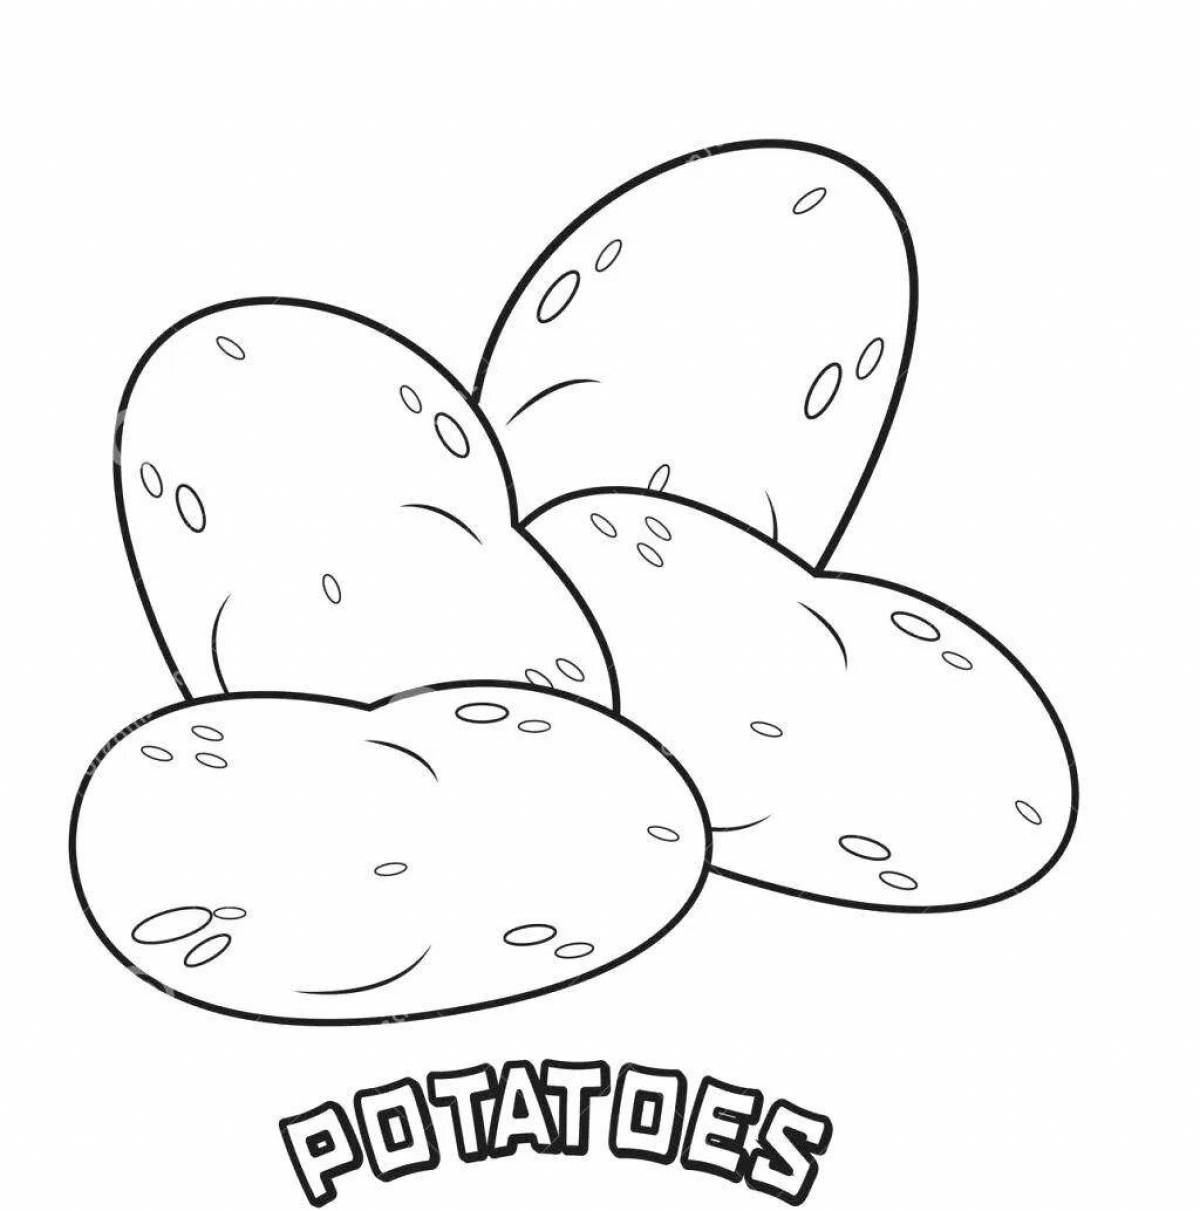 Fun potato coloring for kids